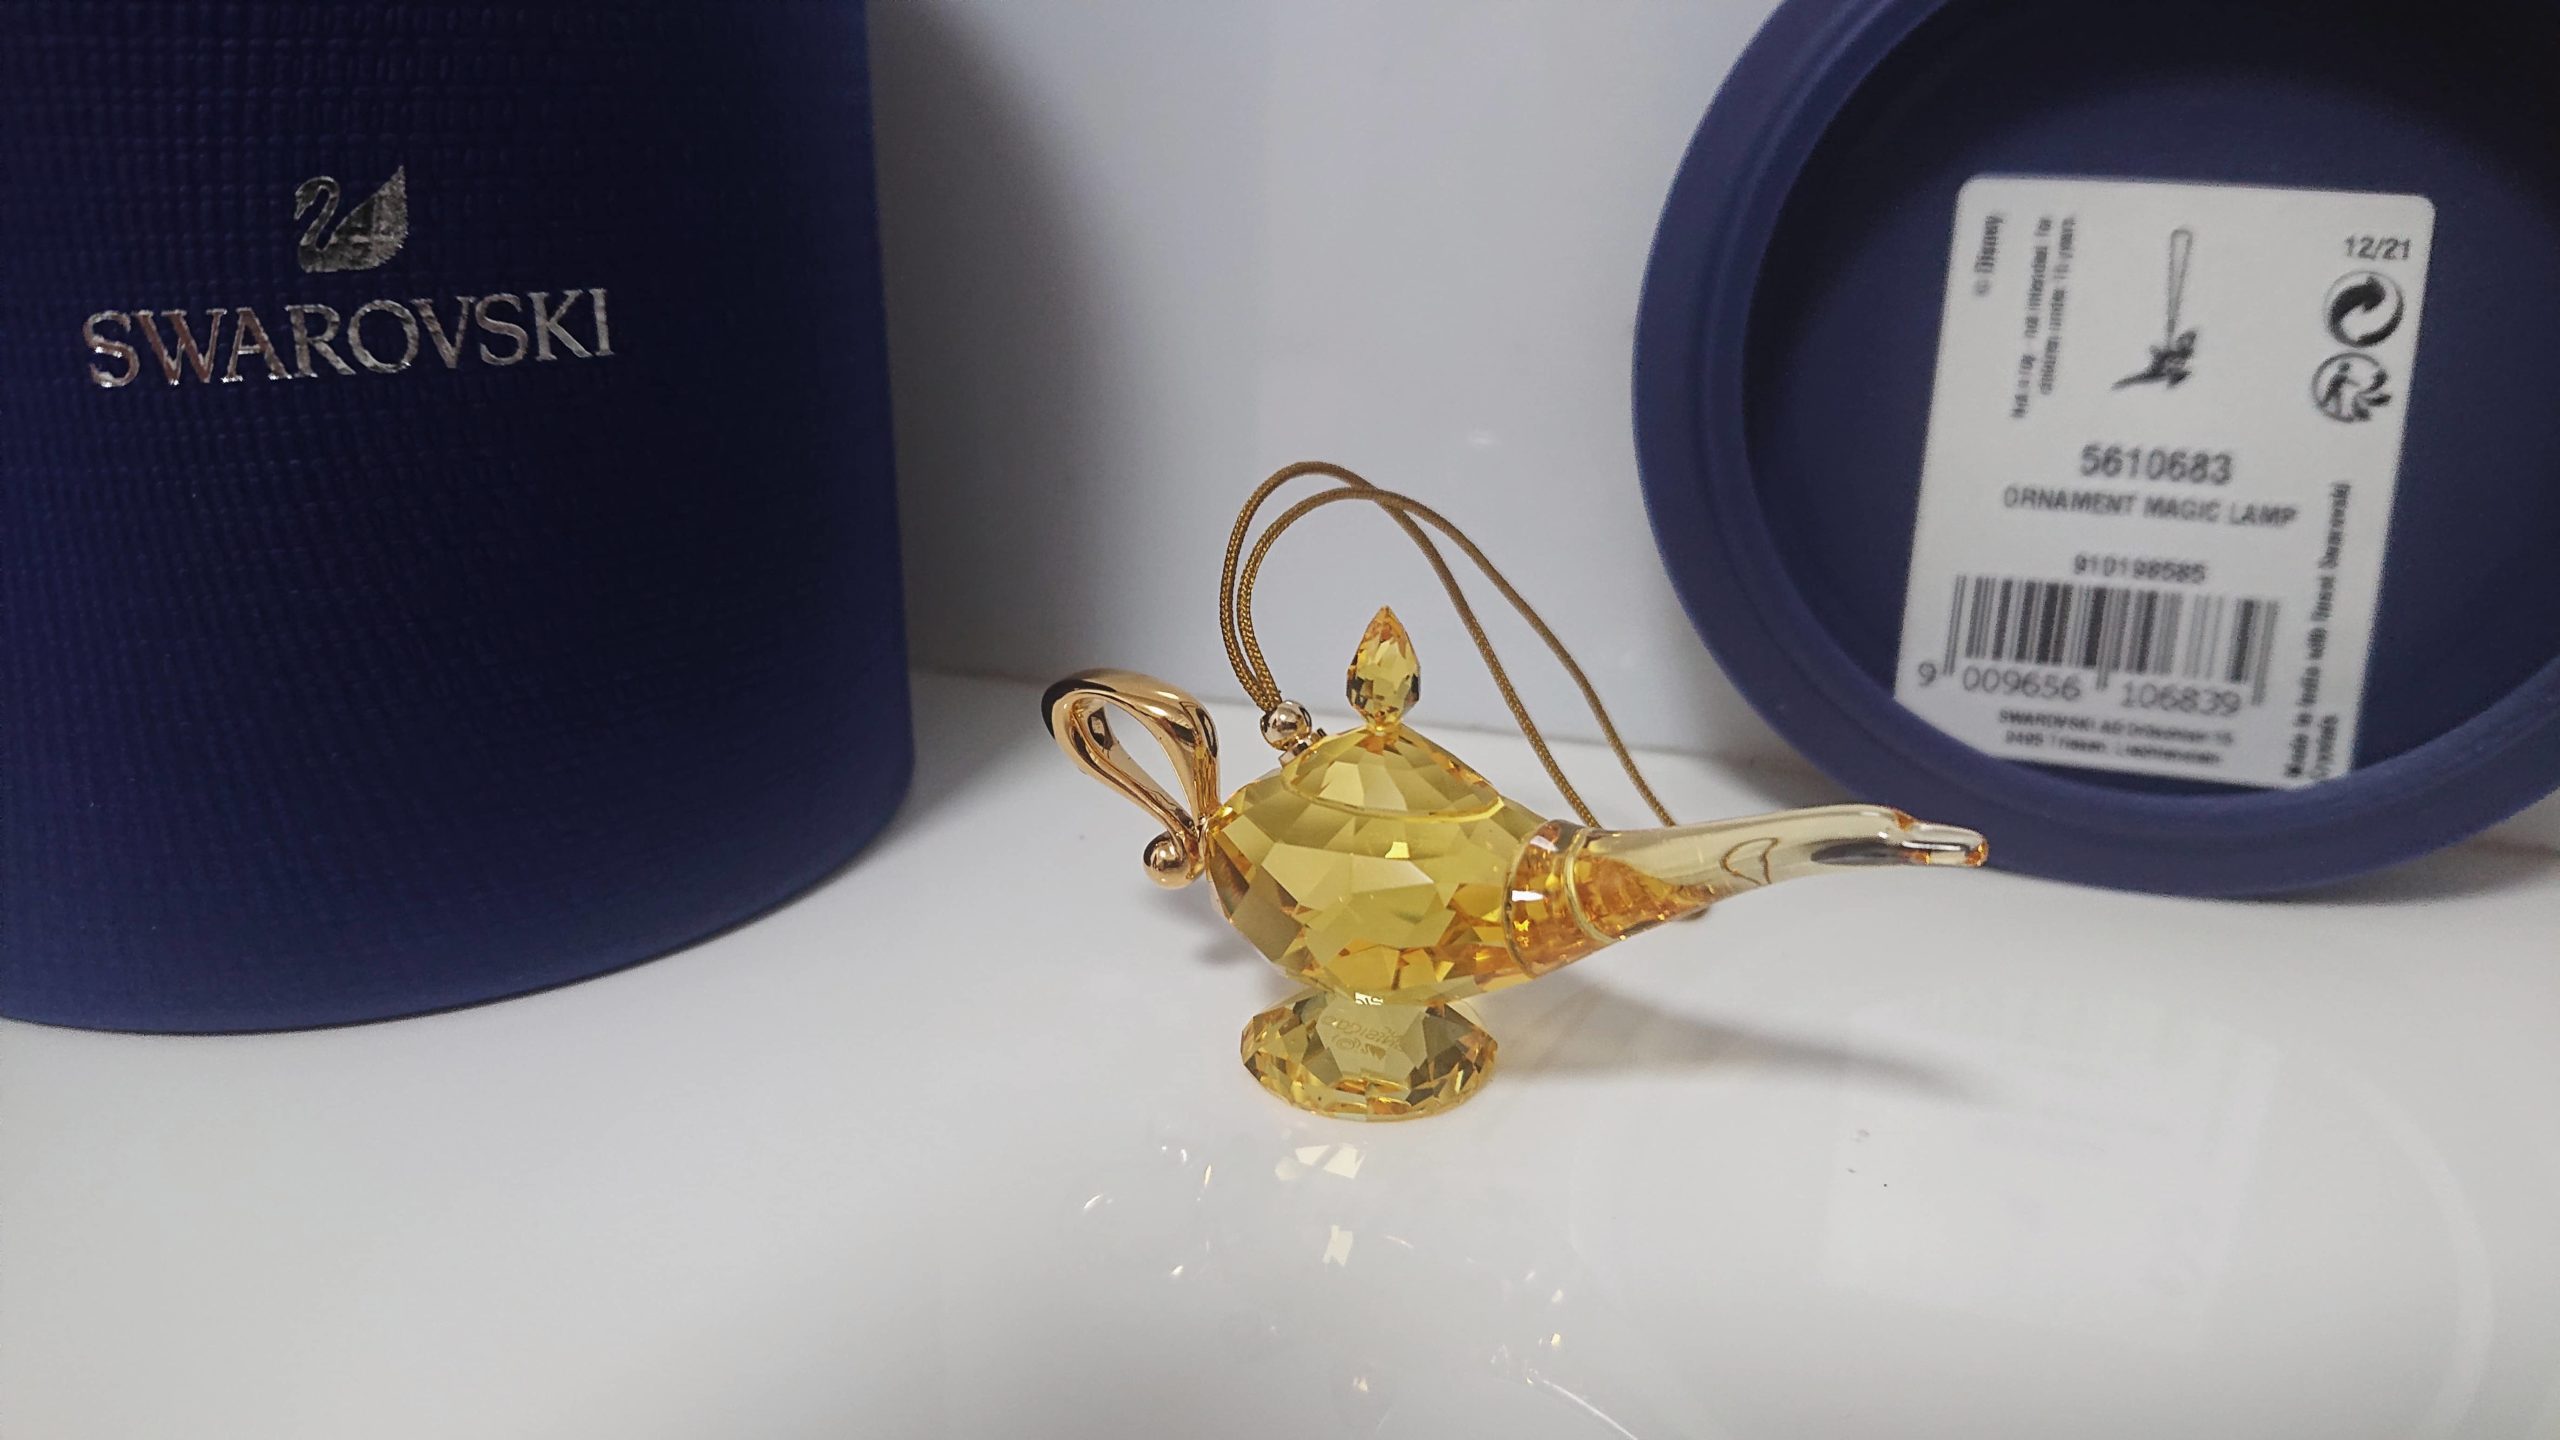 Swarovski Wunderlampe Ornament Magic Collectorshop Disney - Aladdin 5610683 Sammler Lamp